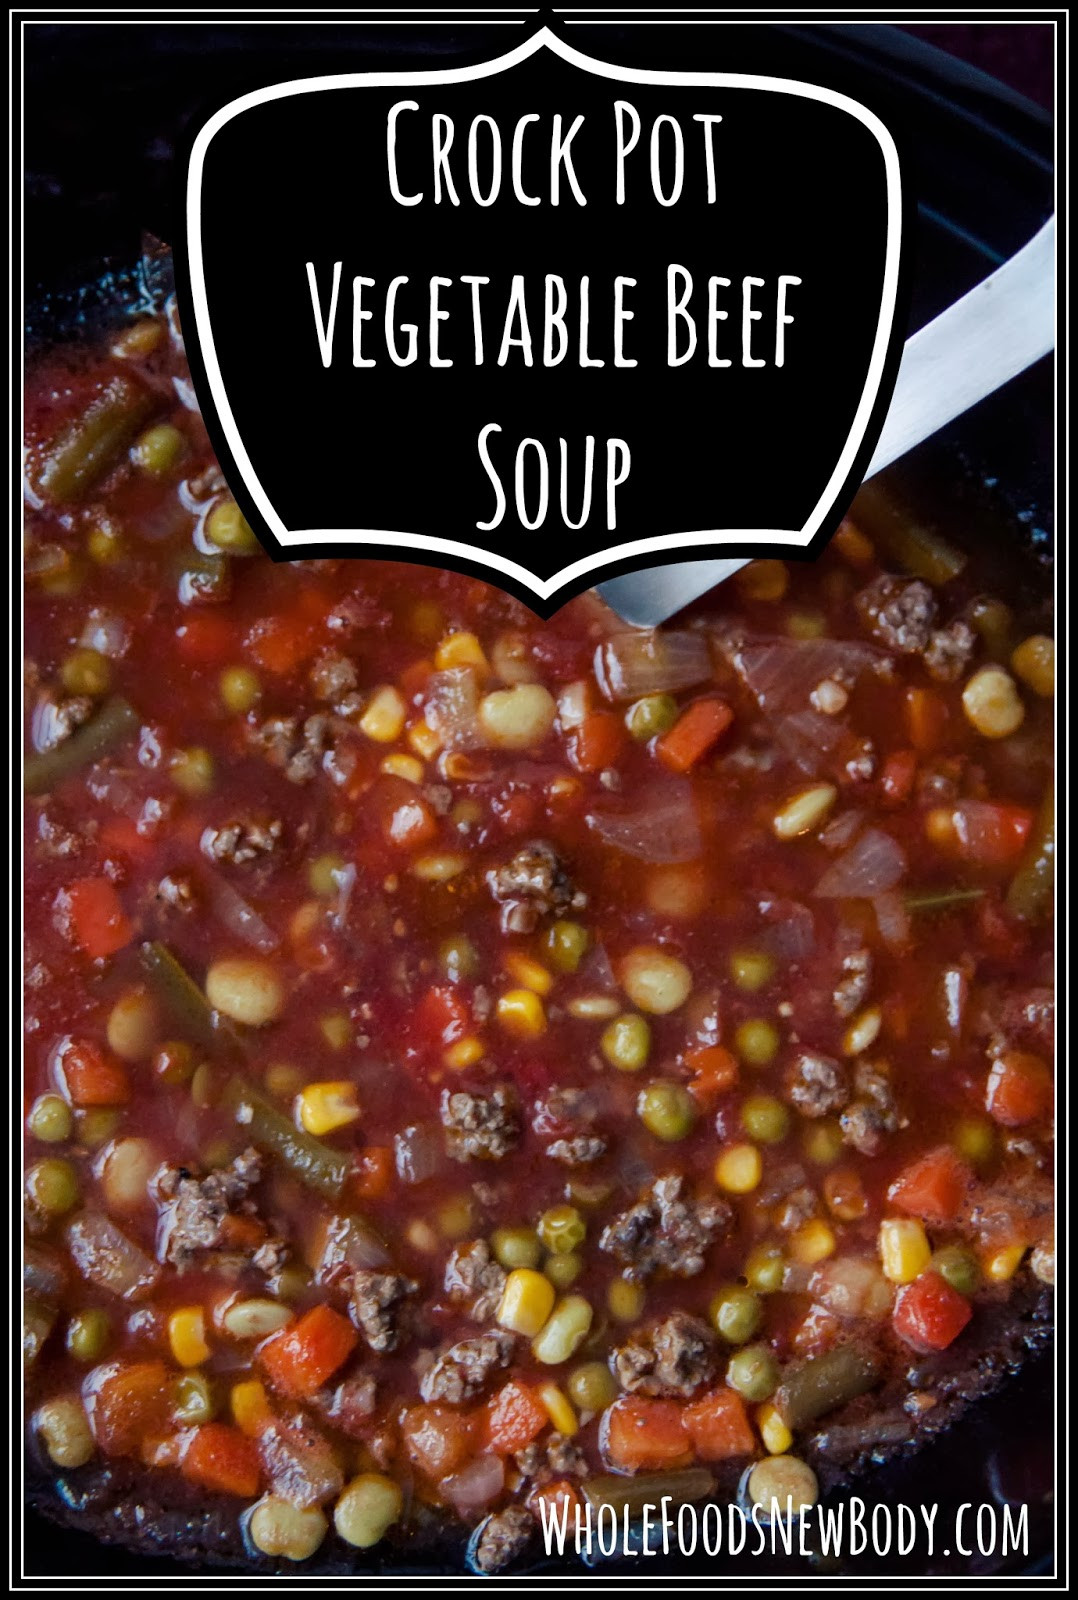 Vegetable Beef Soup Crock Pot
 Whole Foods New Body Crock Pot Ve able Beef Soup